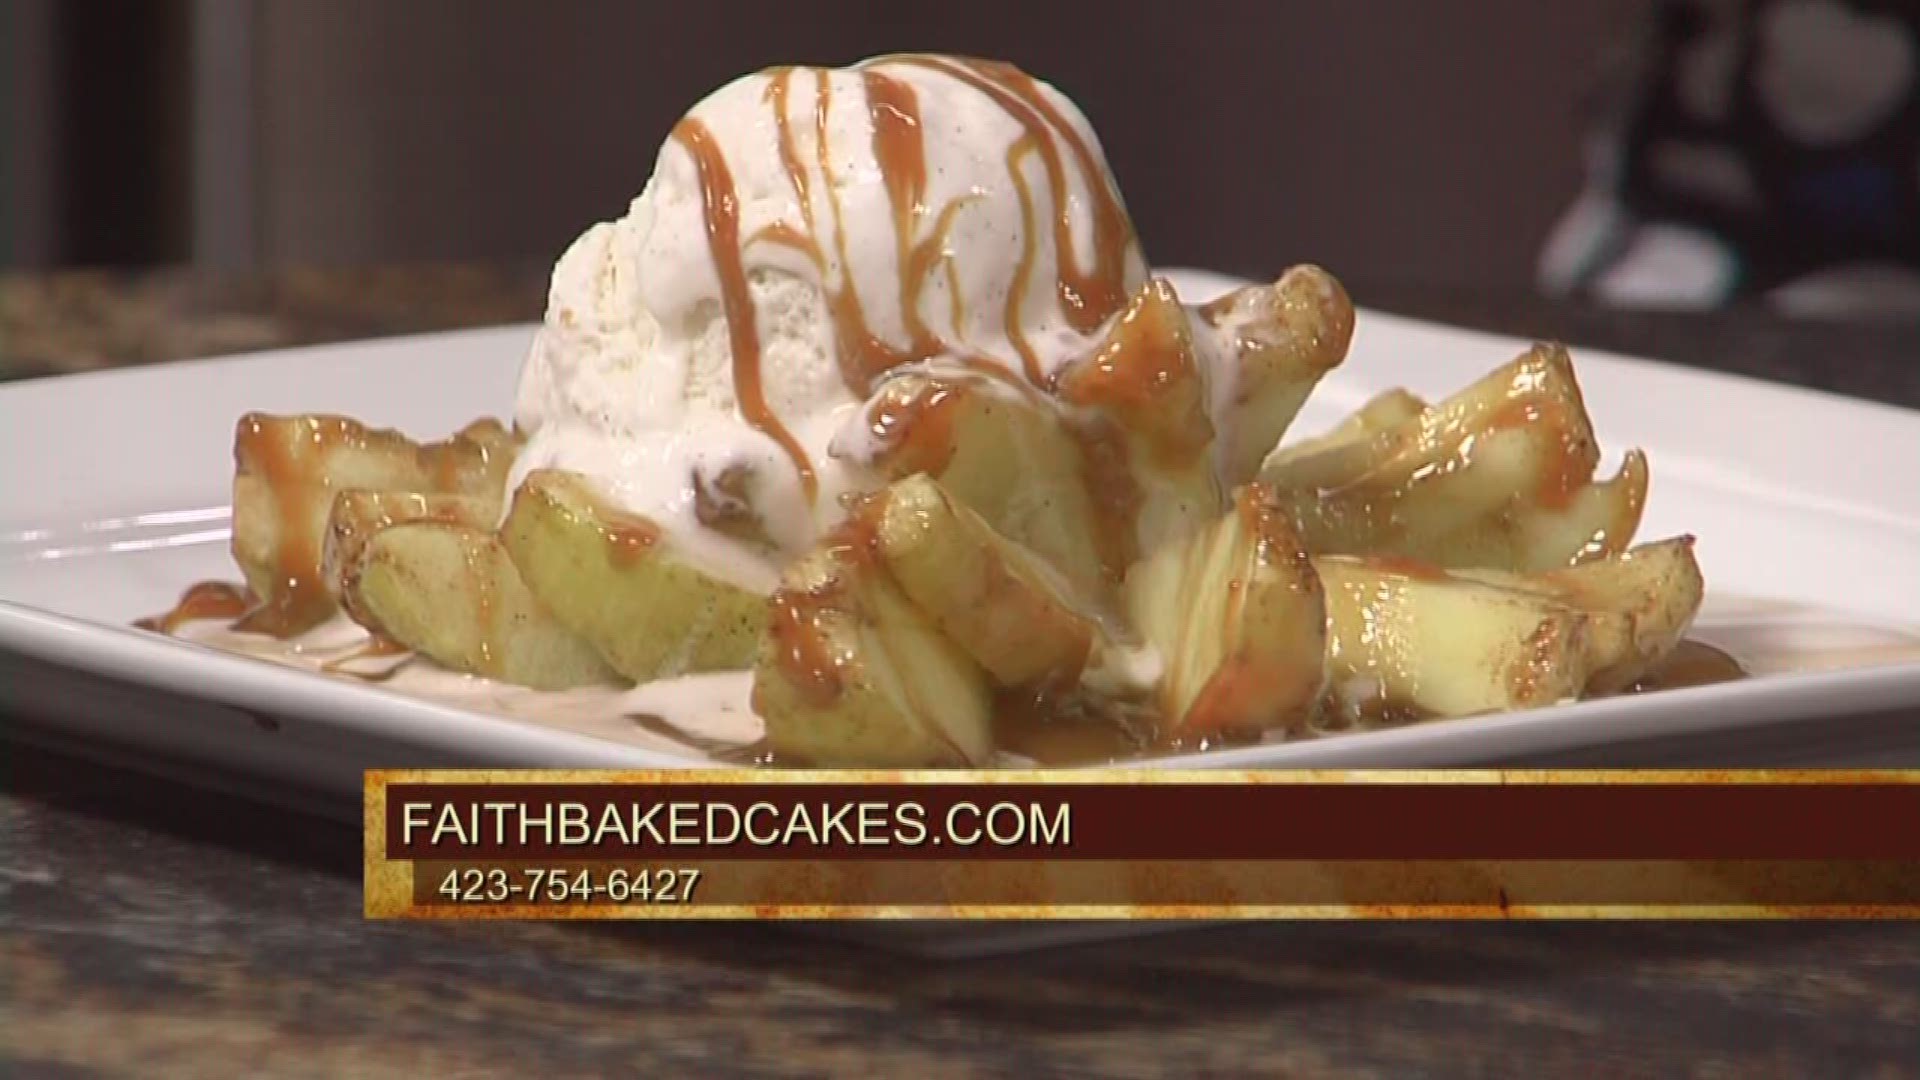 Shona House of Faith Baked Cakes prepares a fall dessert using fresh apples. For more of Shona's recipes visit faithbakedcakes.comOr follow them on FacebookSeptember 18, 2017, 4pm